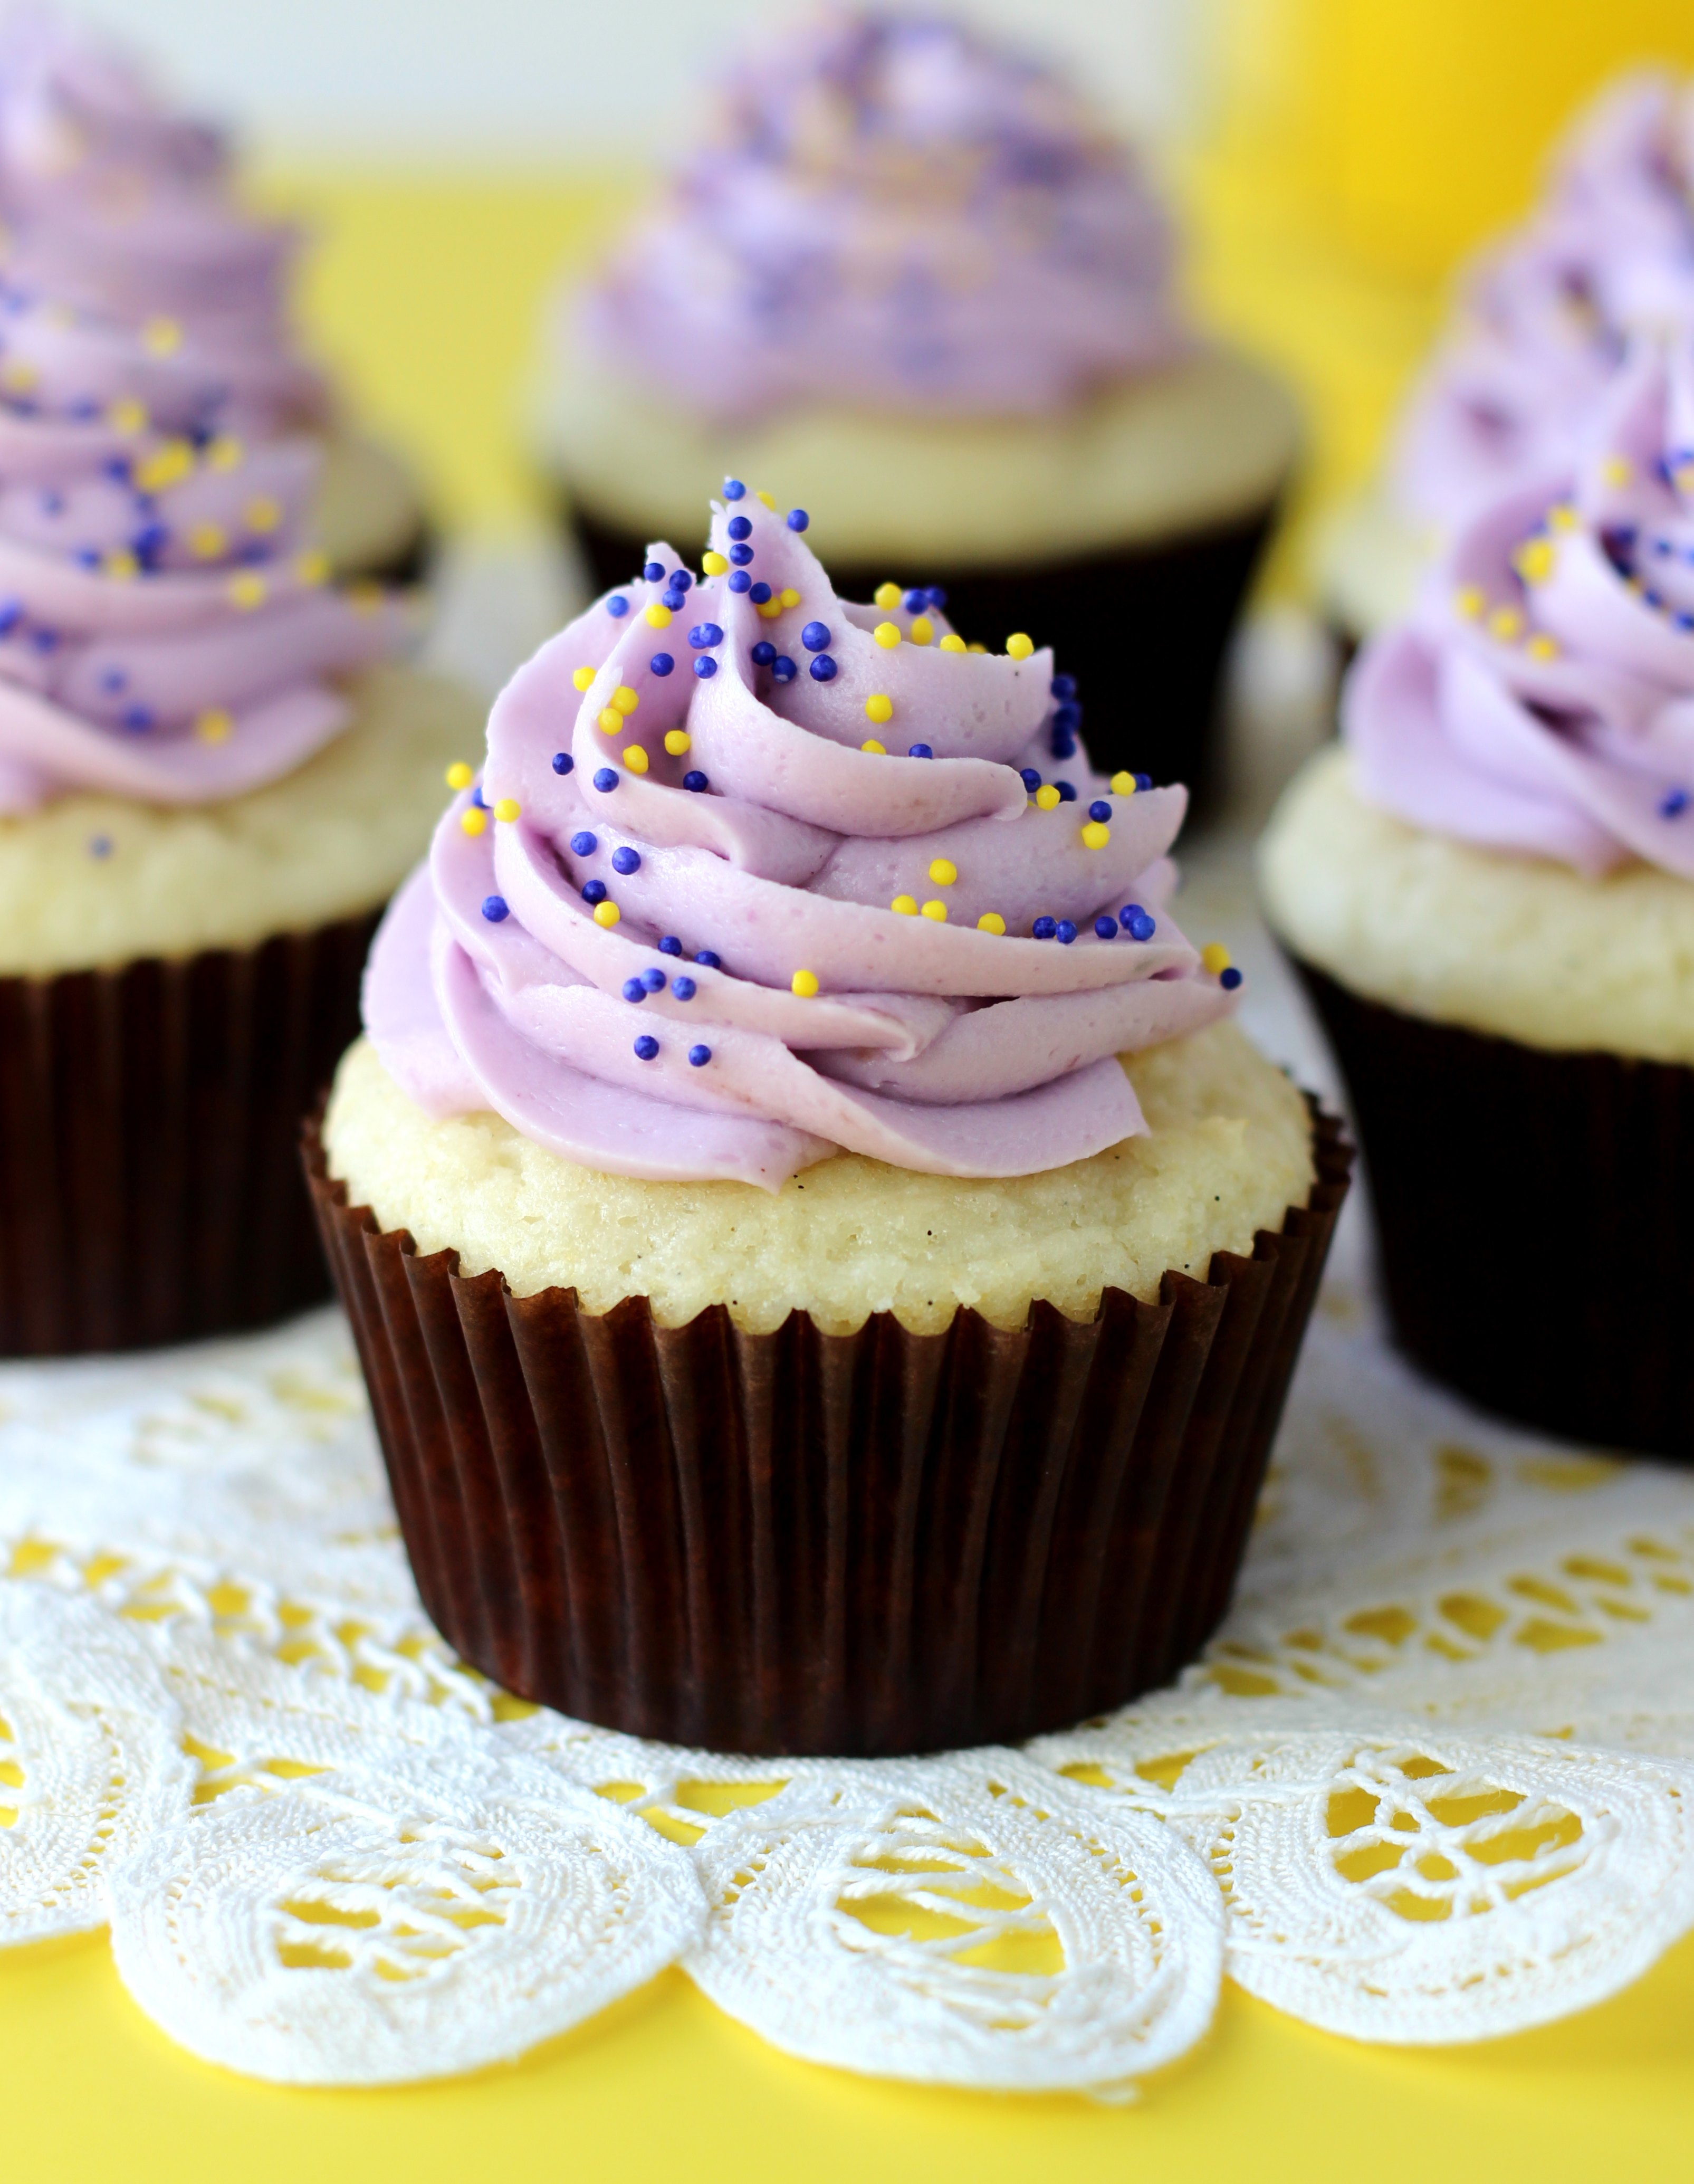 Cupcakes - Cupcakes Photo (35199706) - Fanpop